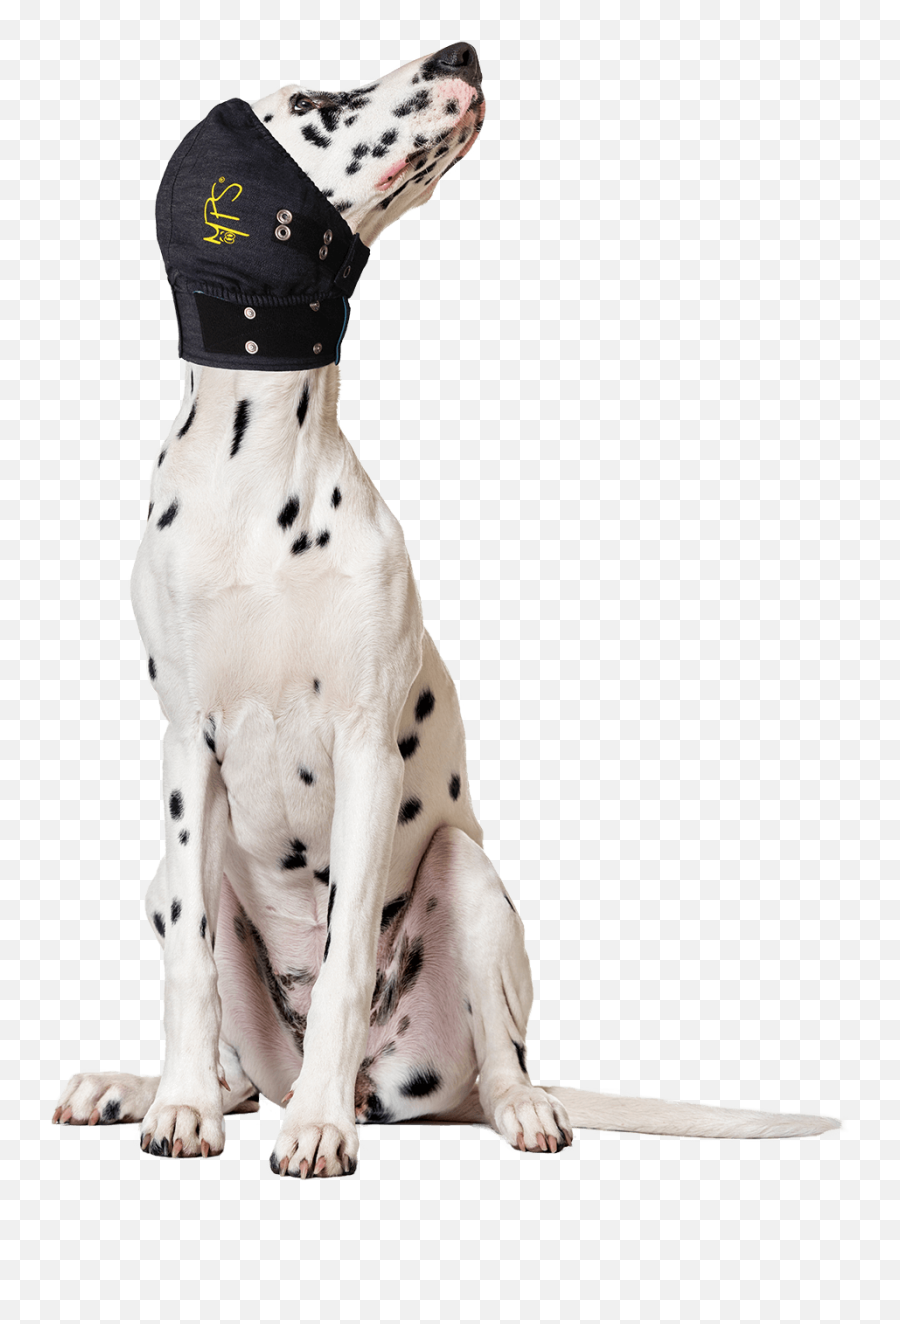 Dog Head Png - Portfolio Stock Photos Dalmatian 1189359 Dalmatian,Dog Head Png